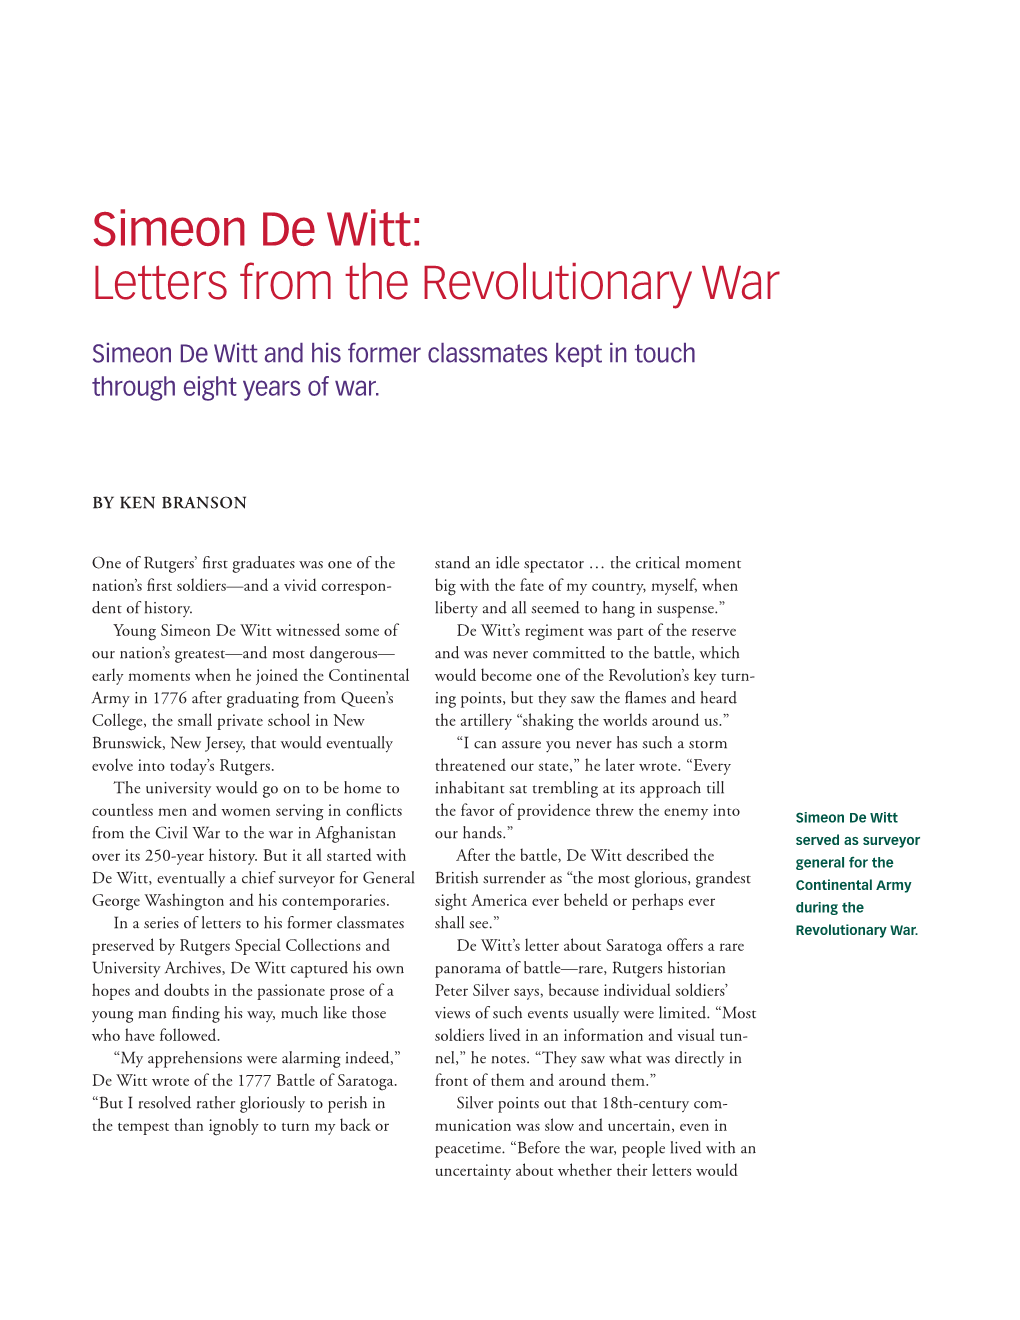 Simeon De Witt: Letters from the Revolutionary War